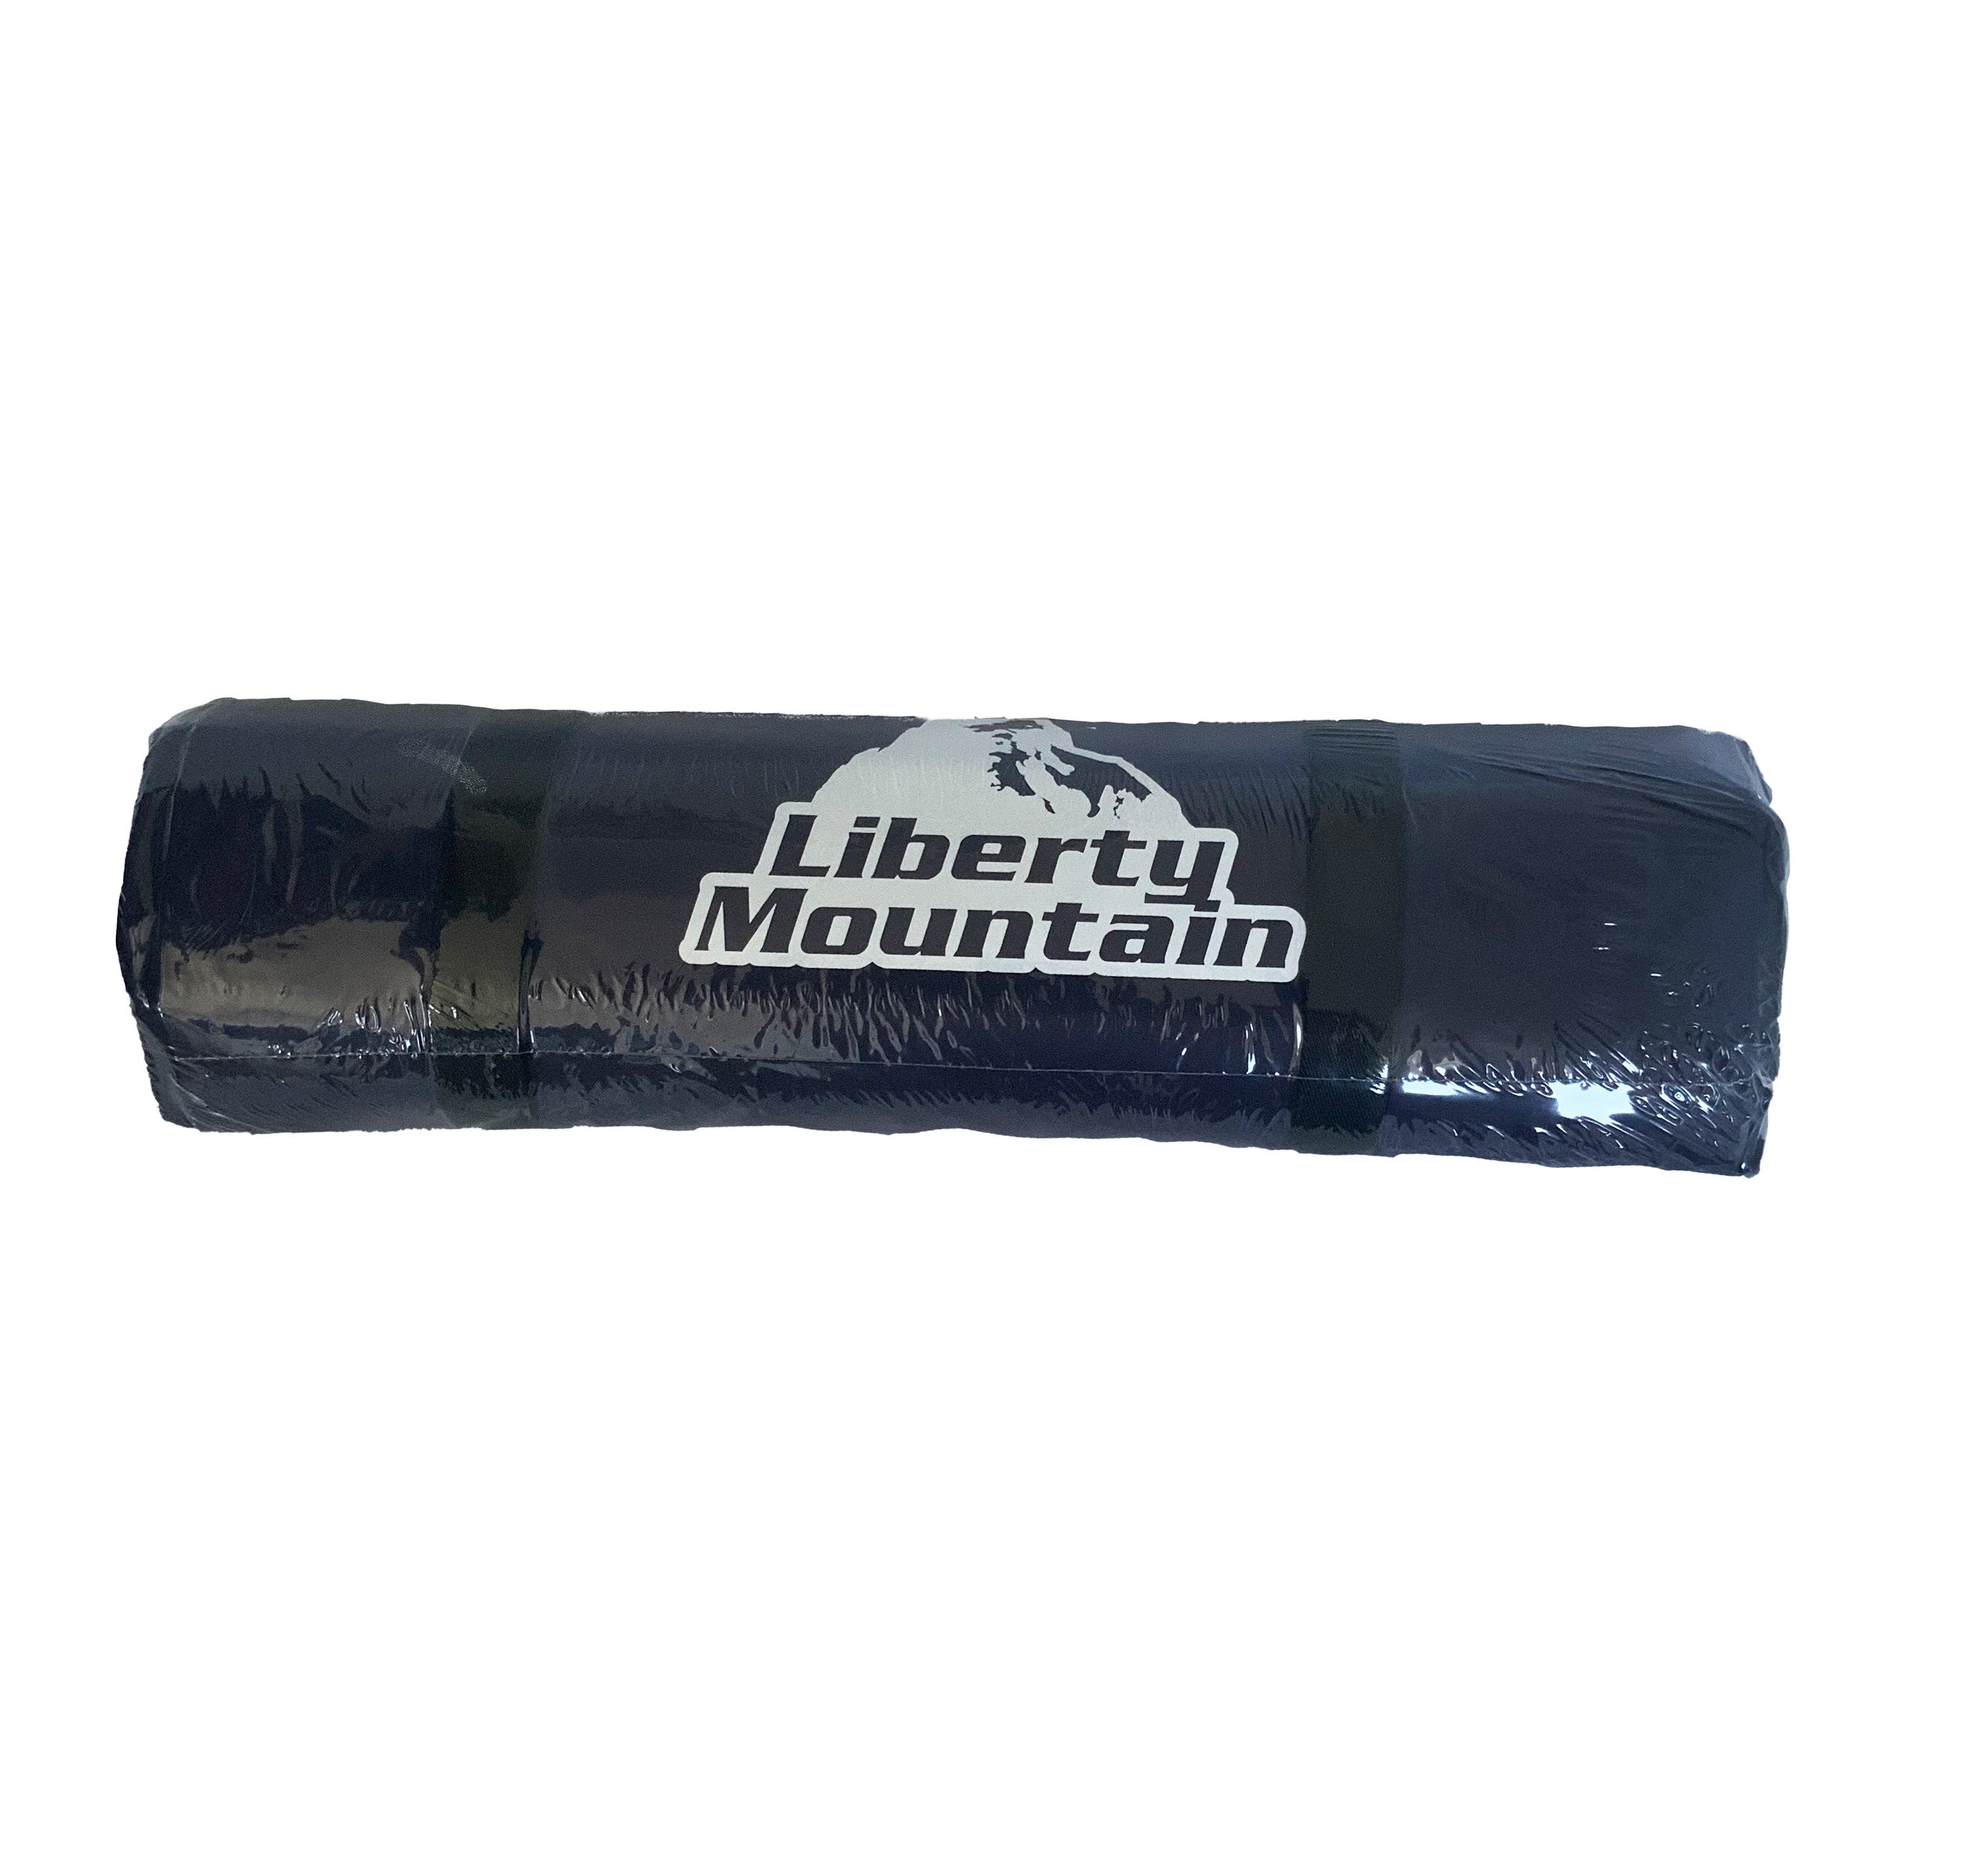 Liberty Mountain | Self-Inflating Sleeping Pad, Sleeping Pads, Pacific Rayne, Defiance Outdoor Gear Co.